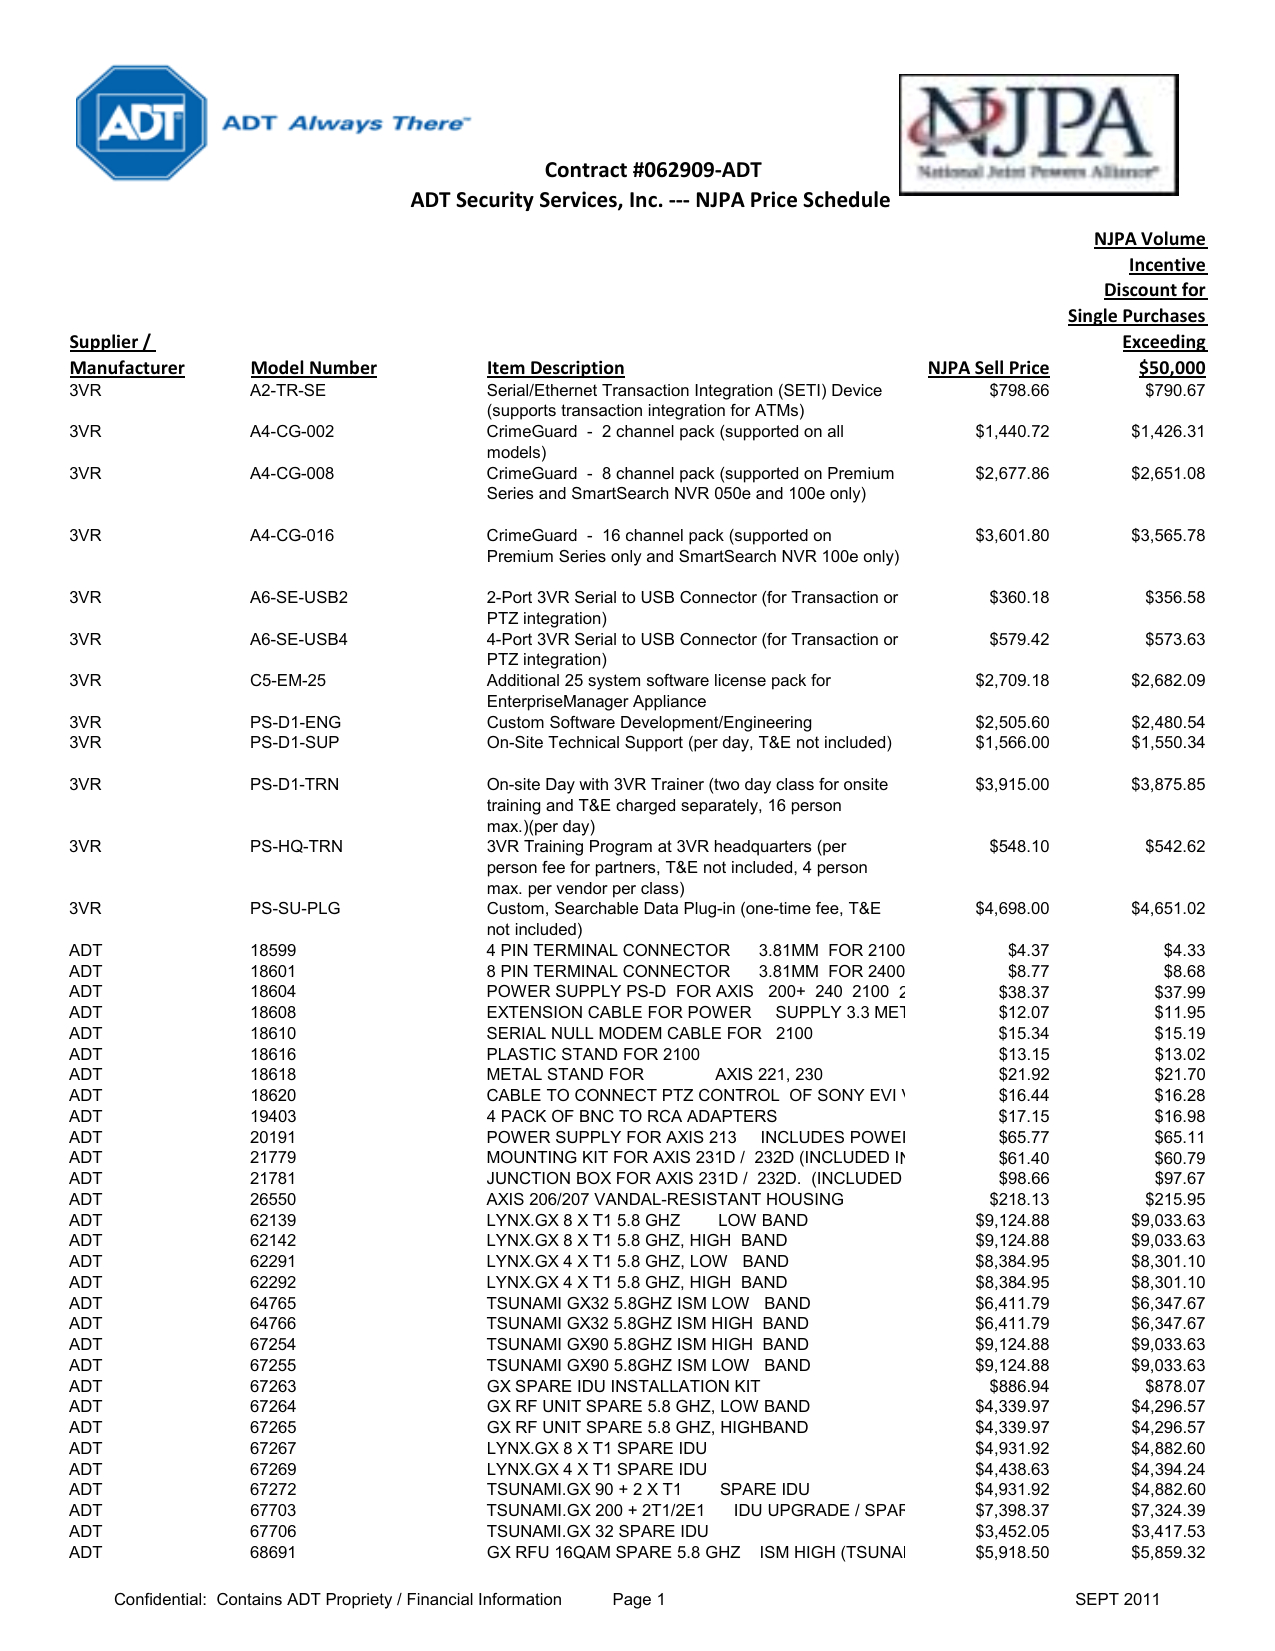 revised njpa price list sept 2011 xlsx